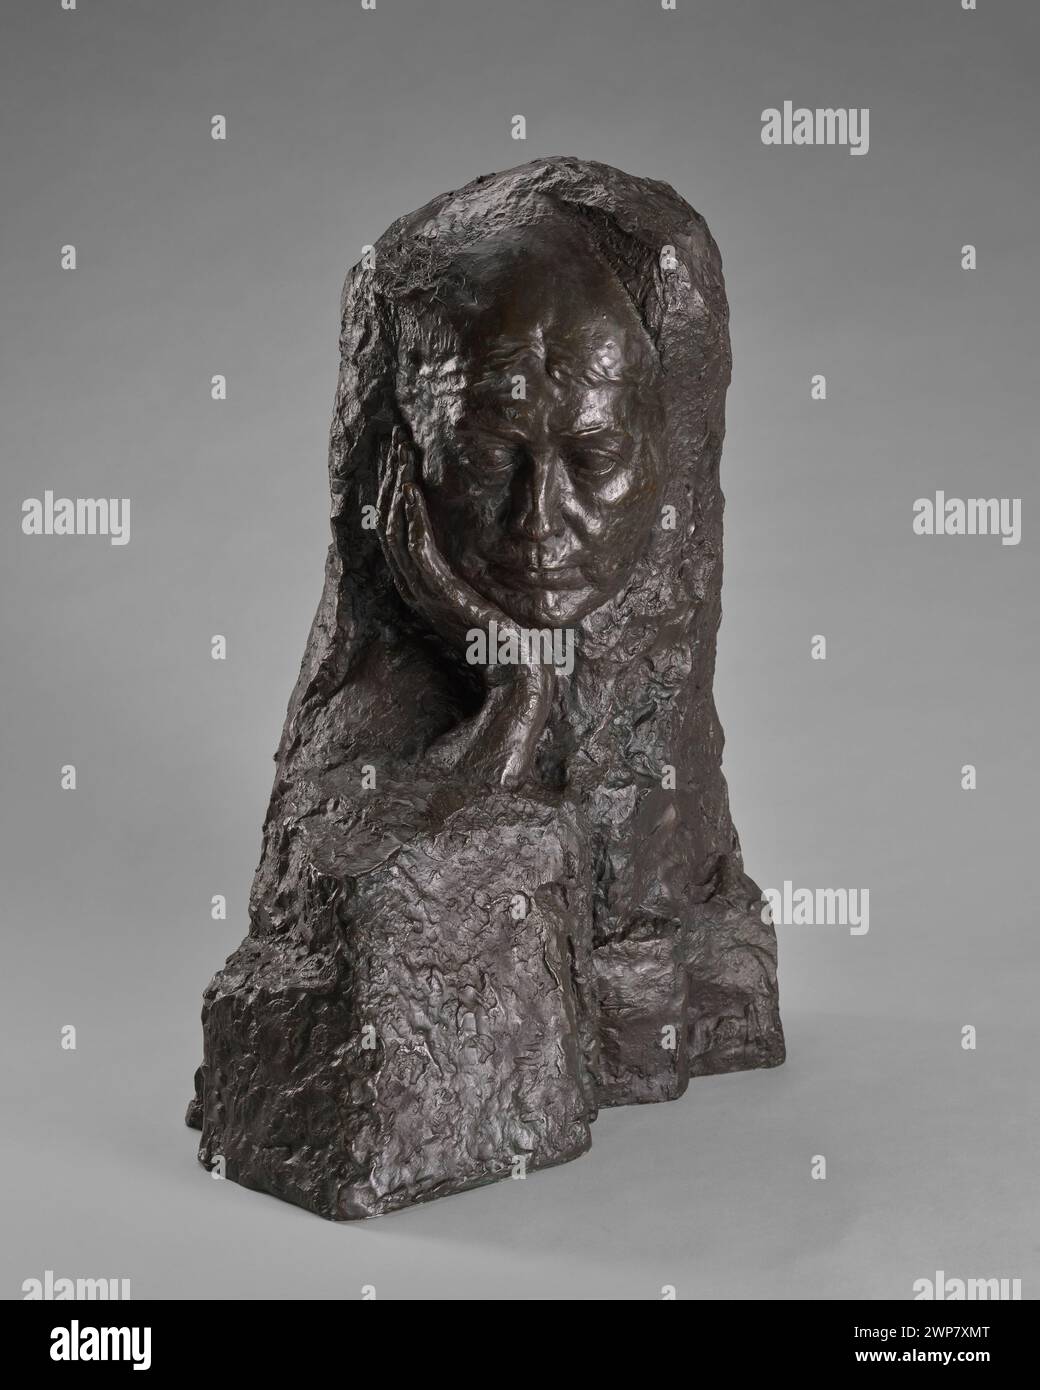 Women's head (Mme Blavatsky); Bohdanowicz, Jadwiga (1887-1943); 1903 (1903-00-00-1903-00-00); Stock Photo